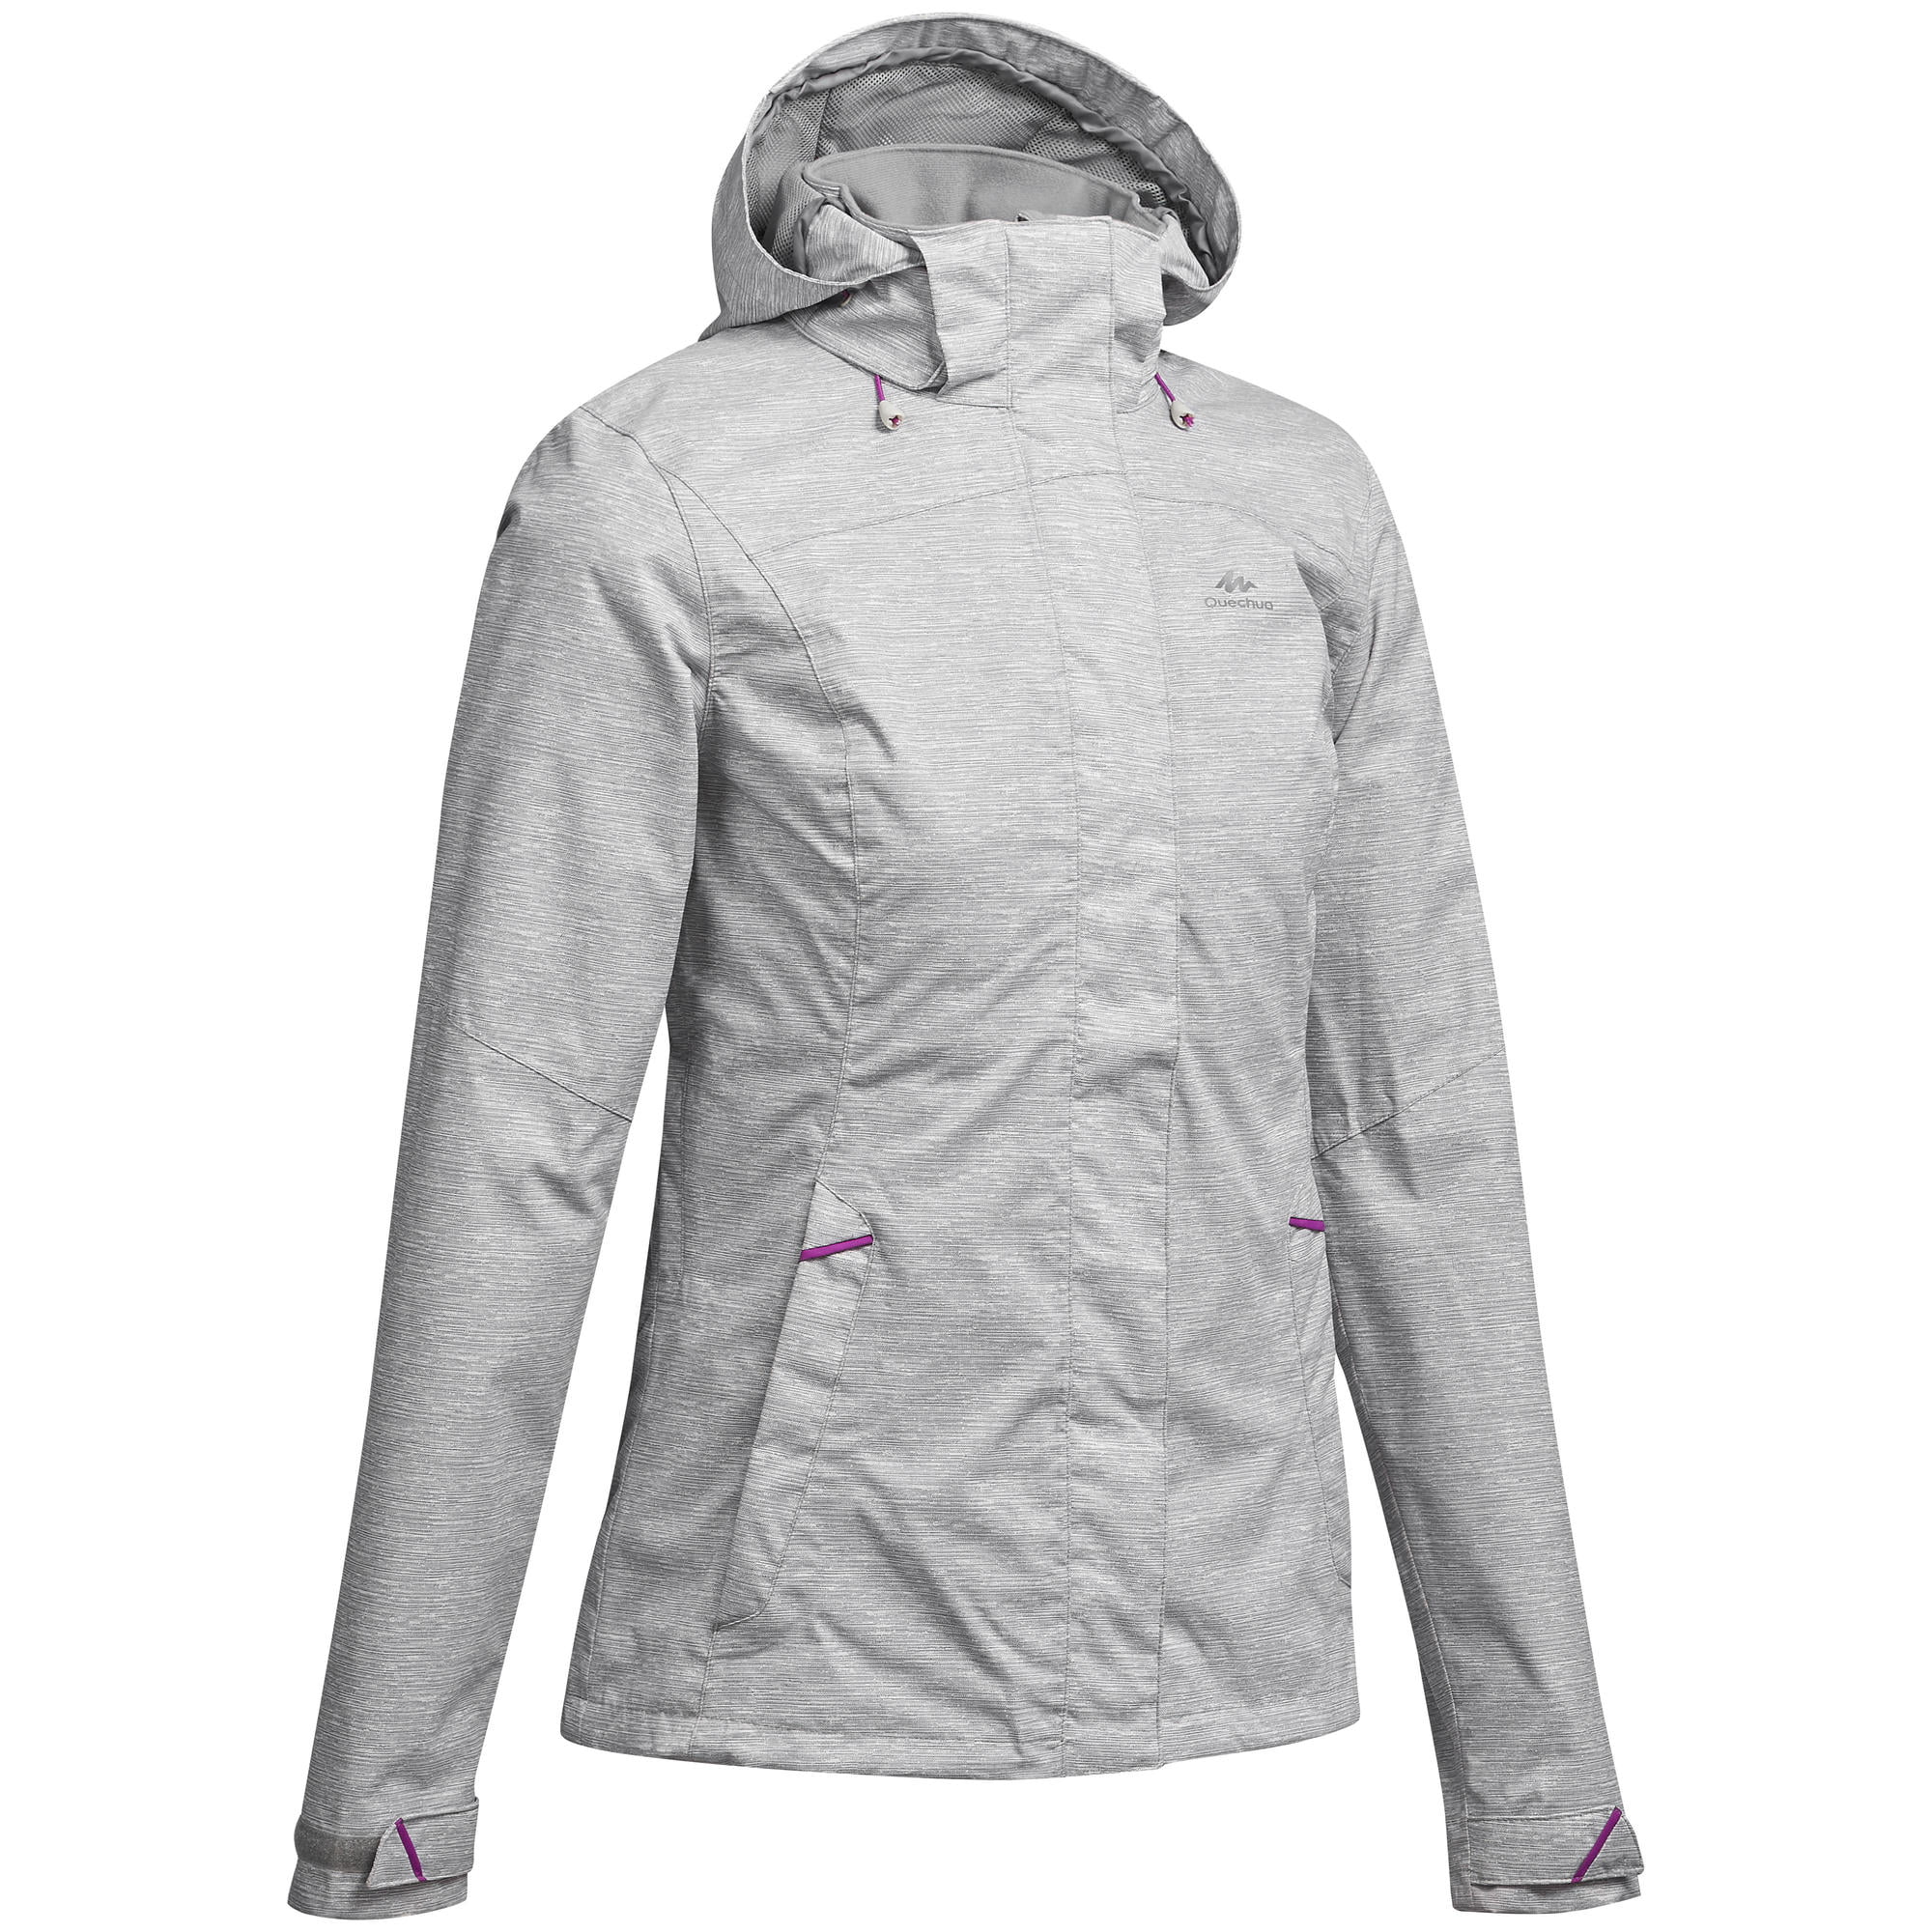 decathlon waterproof jackets